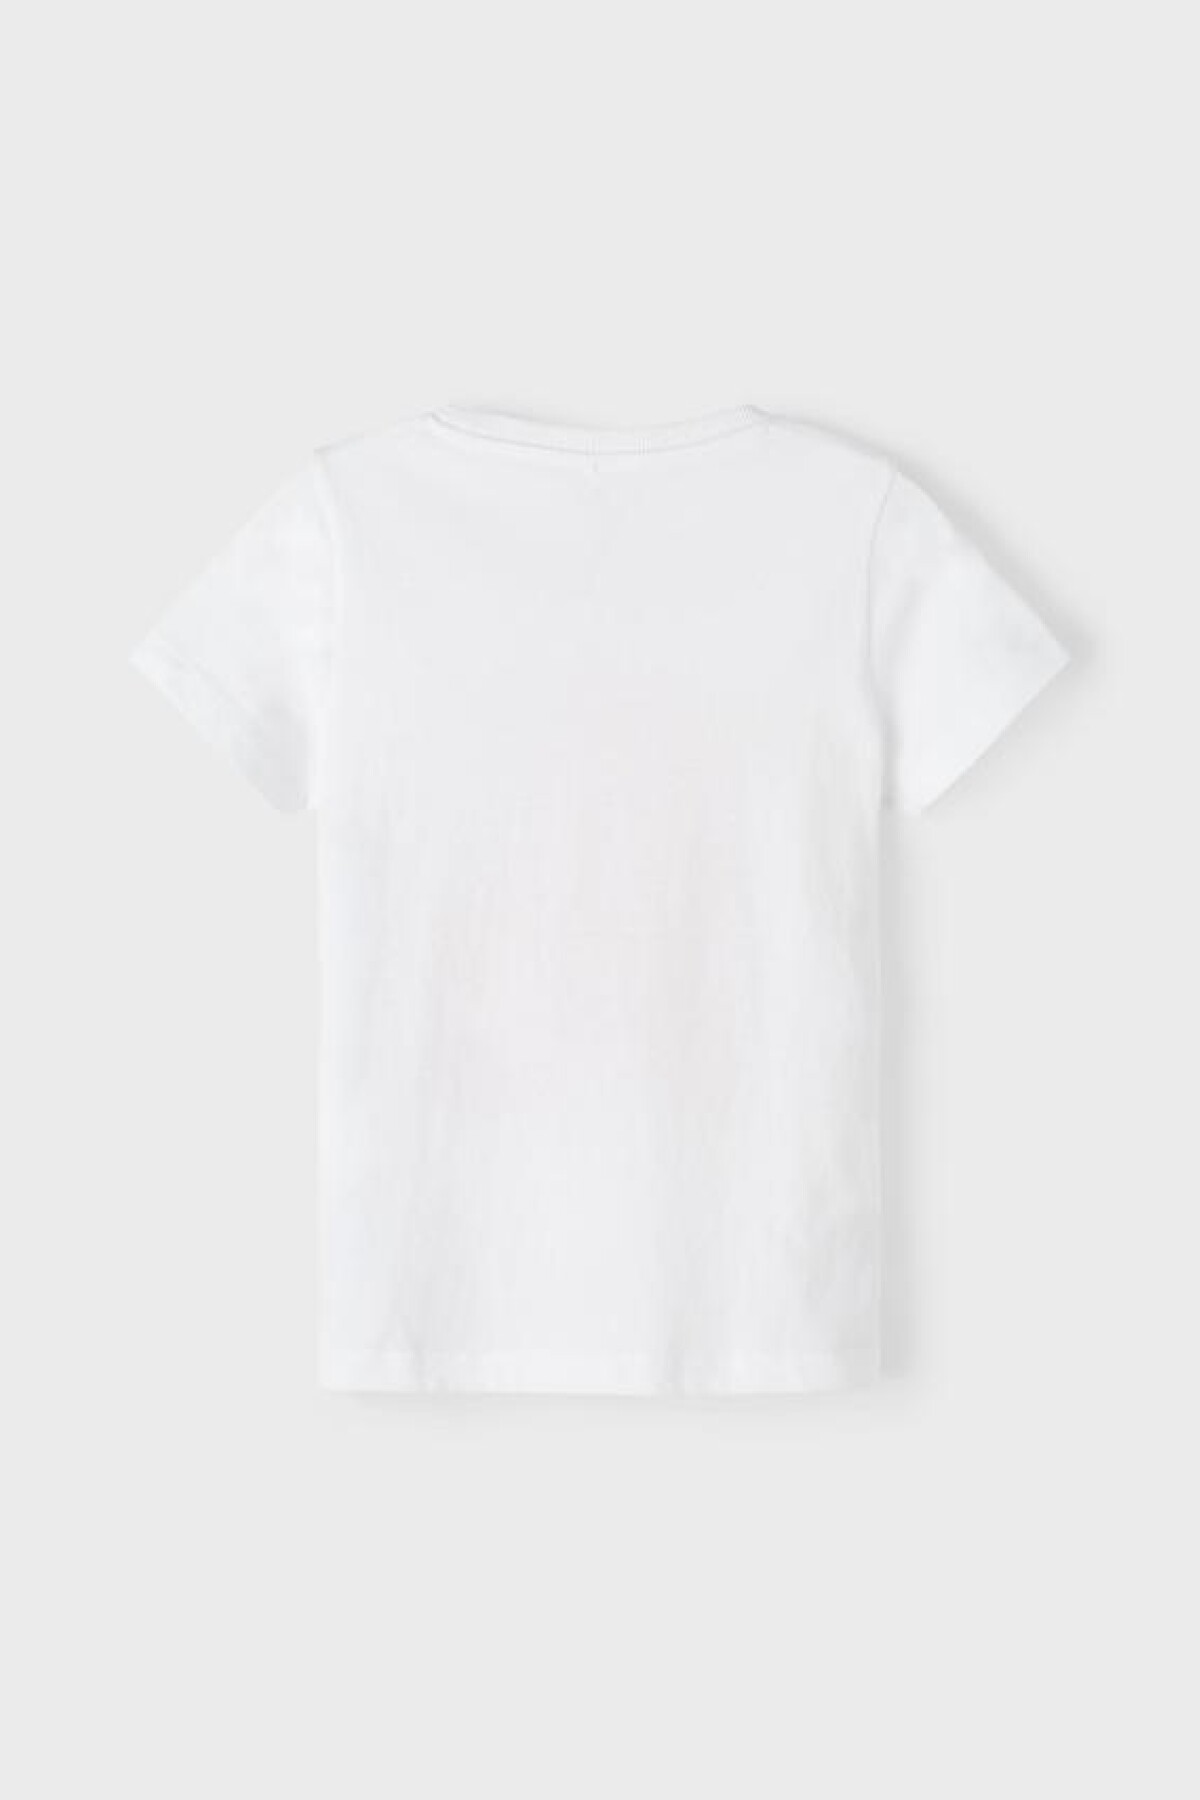 Camiseta Halotte BRIGHT WHITE